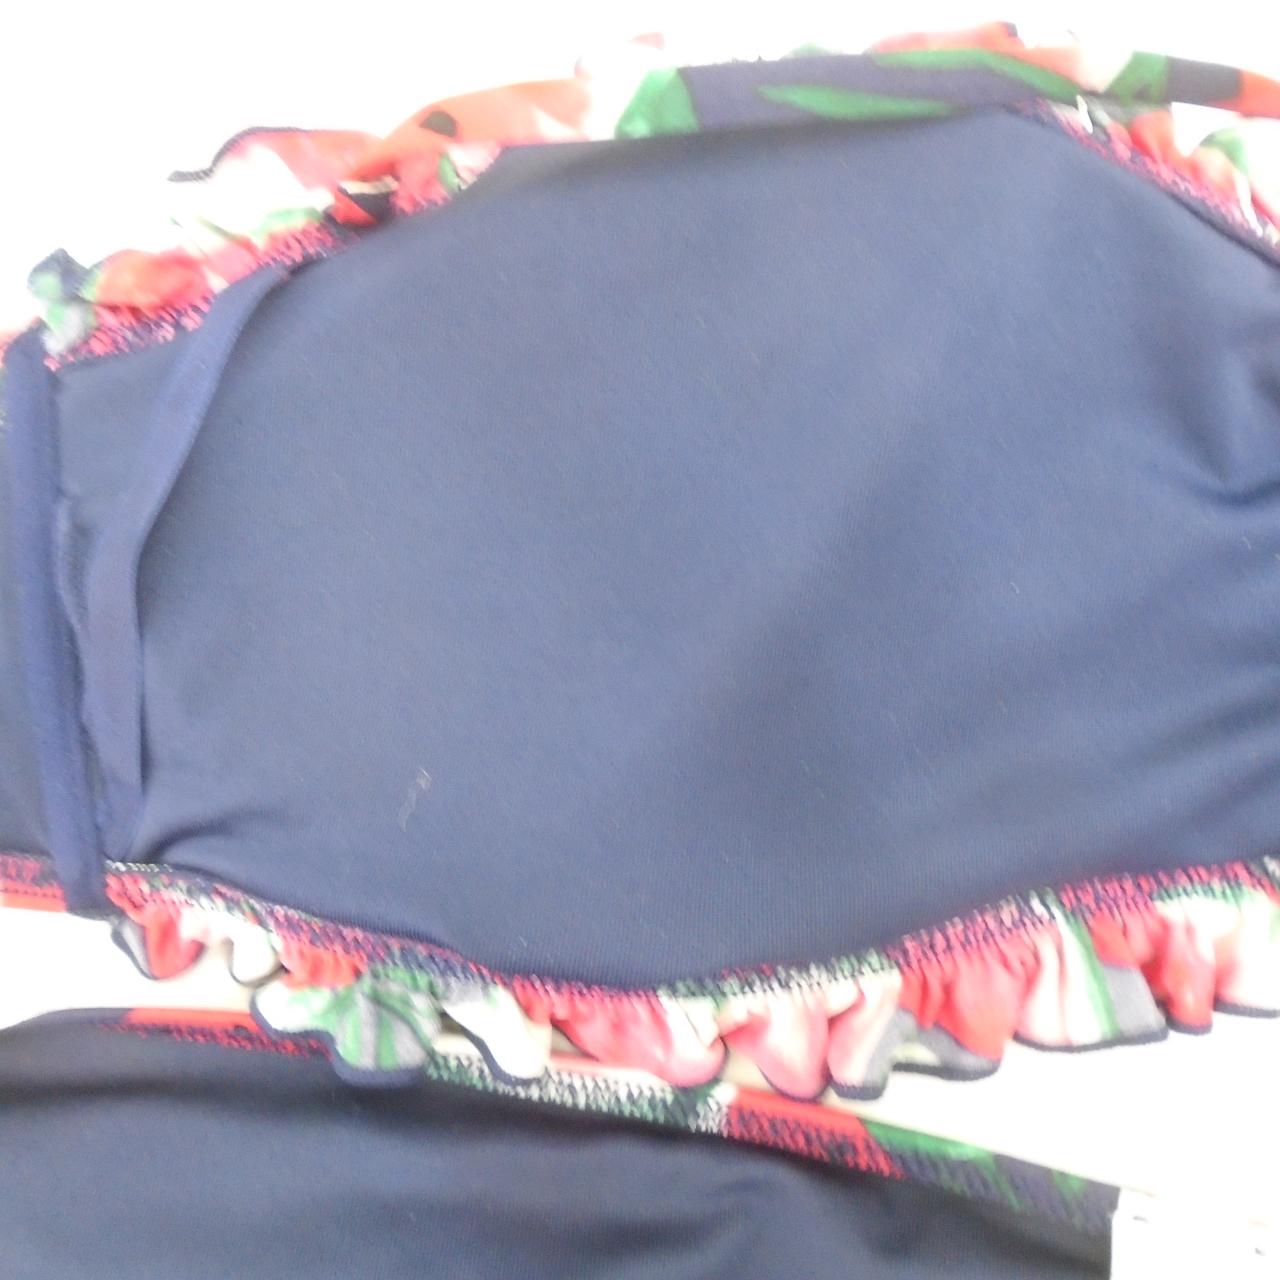 Women's Swimsuit Oysho. Multicolor. L. Used. Good